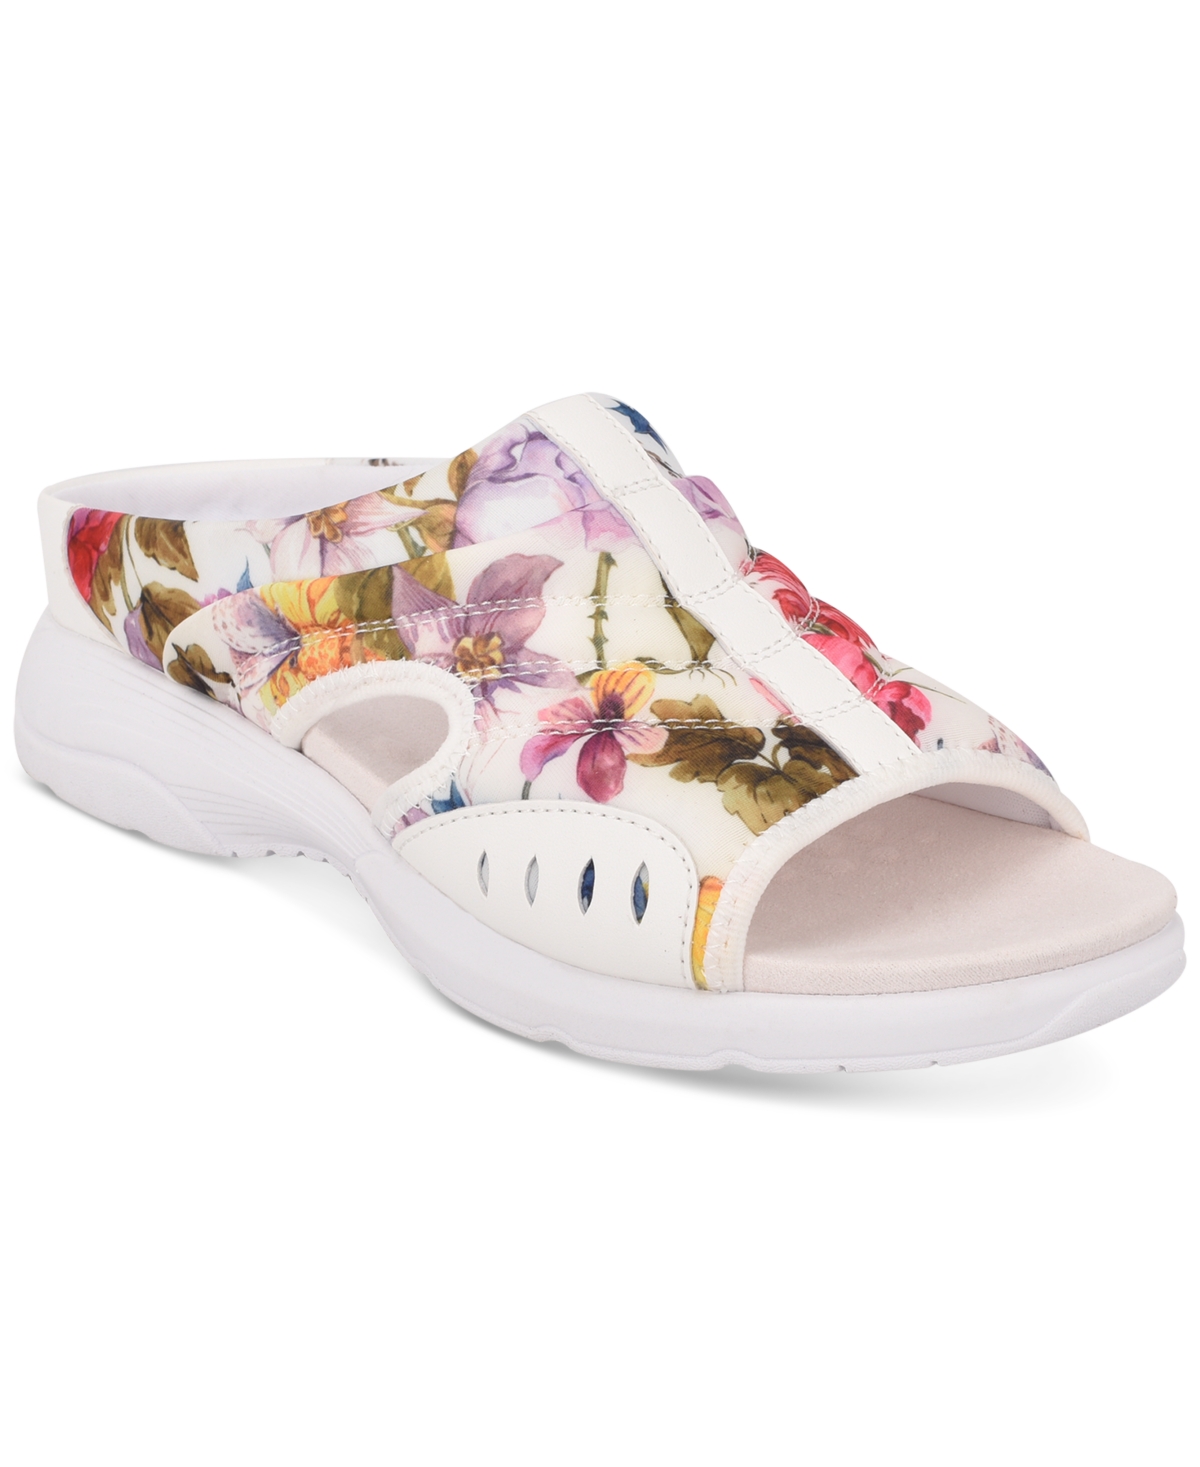 Women's Traciee Square Toe Casual Slide Sandals - White, Rainbow Multi - Textile, Manmade